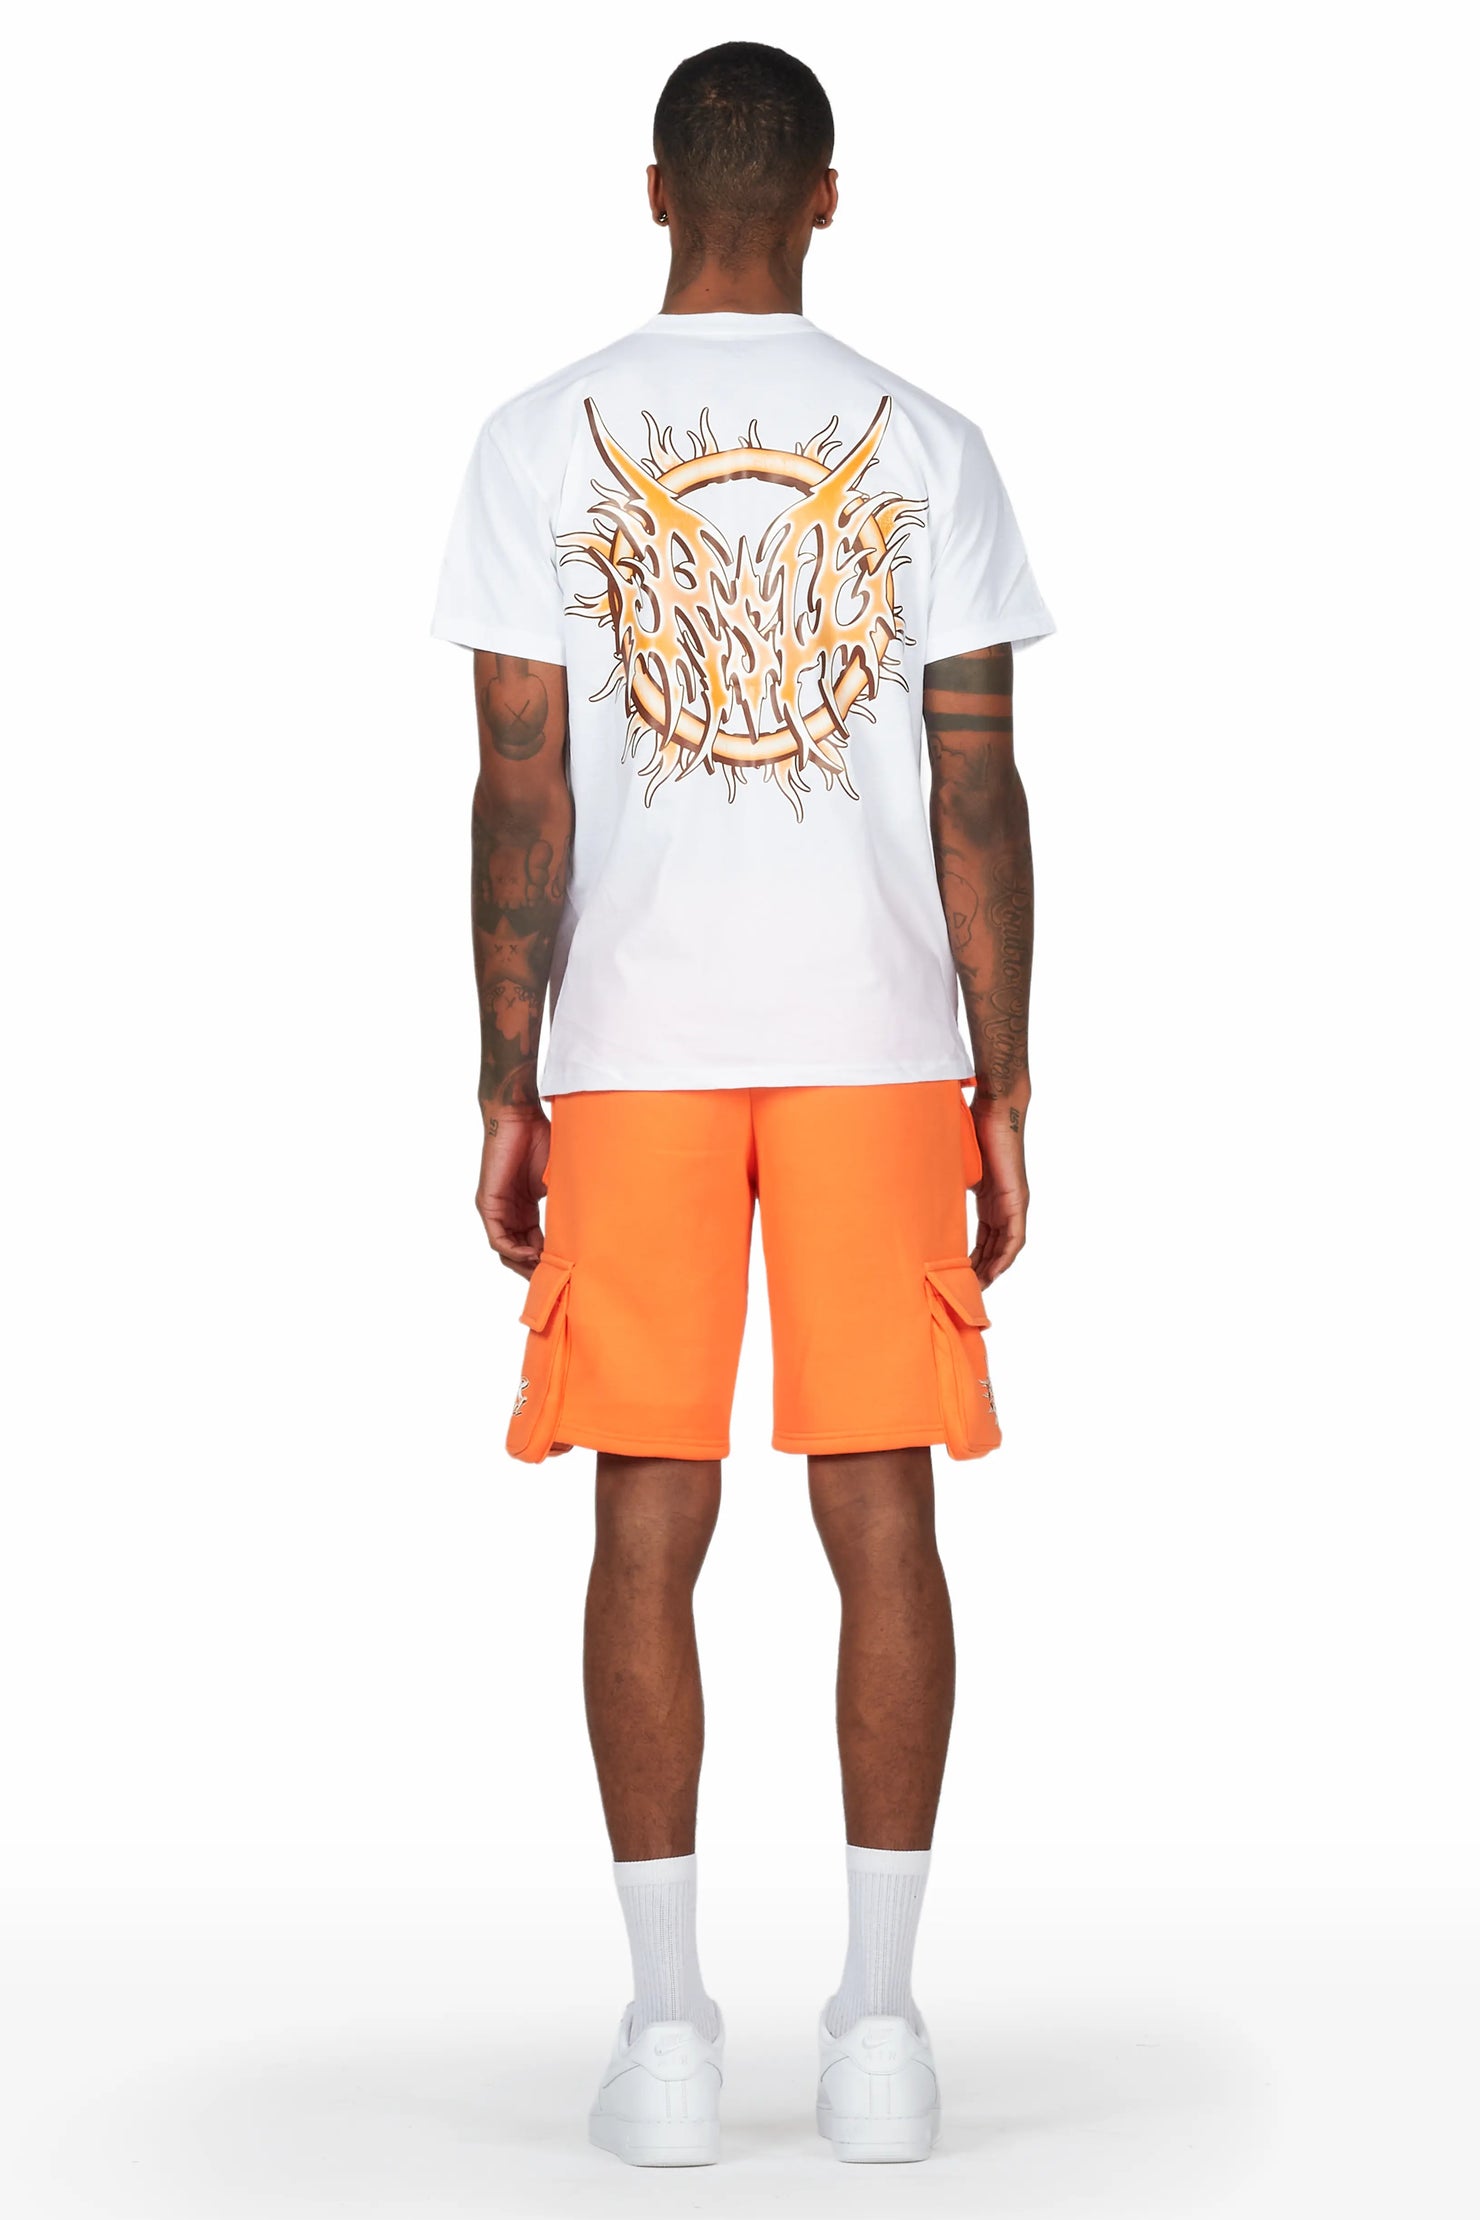 Yoga White/Orange T-Shirt Short Set